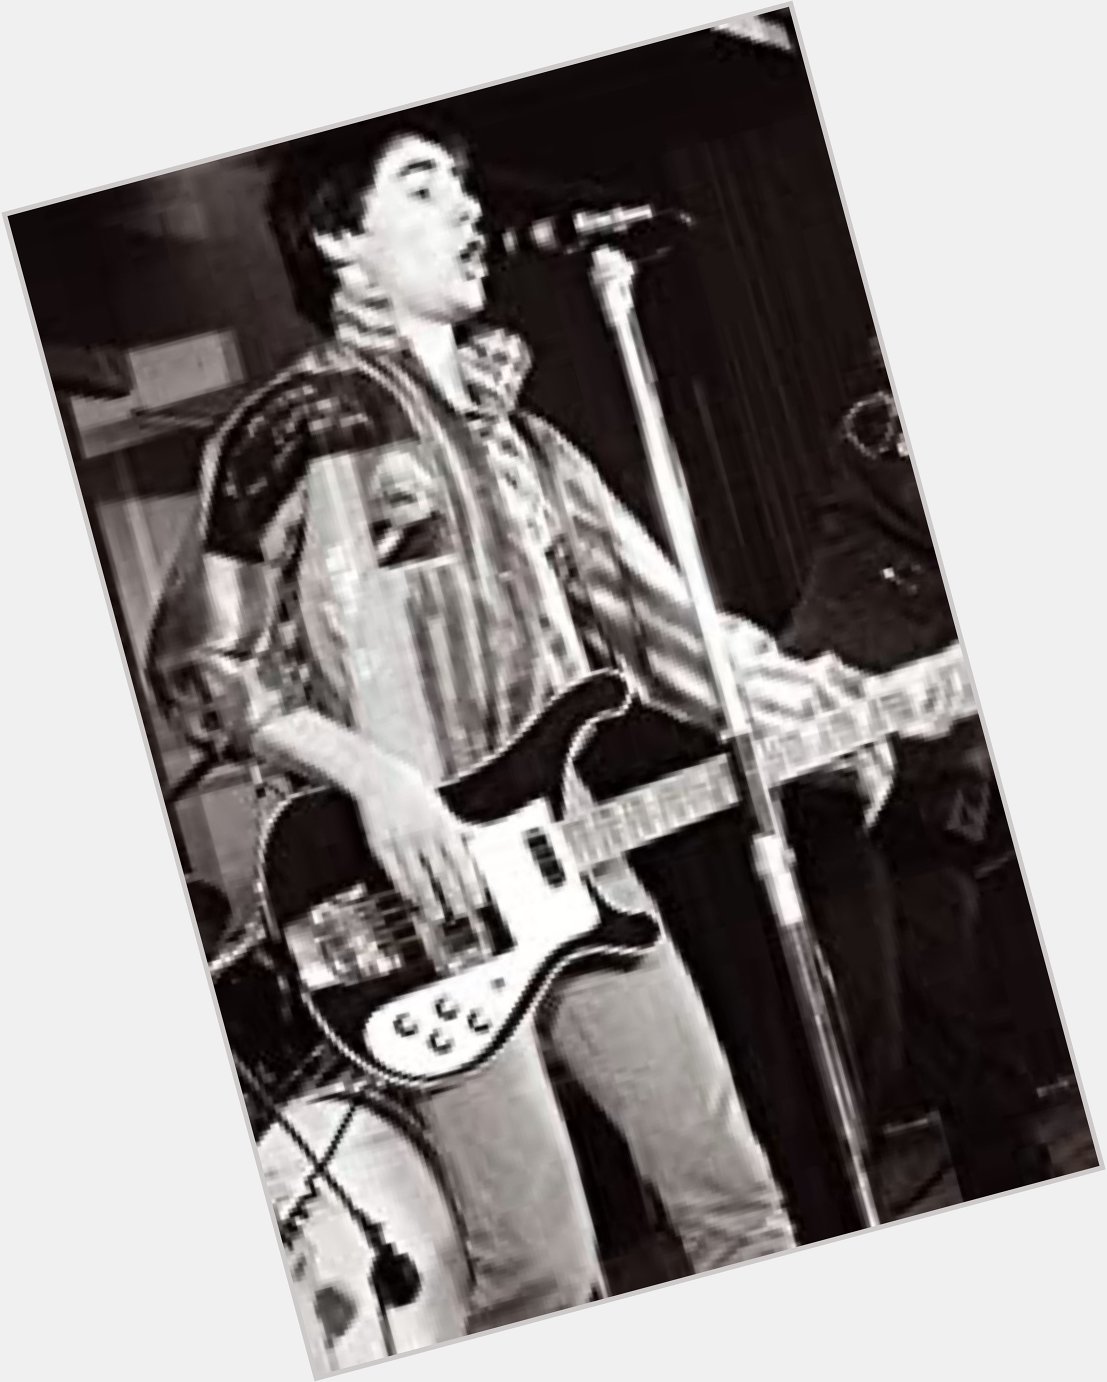 Happy 66th birthday to original Sex Pistols bassist Glen Matlock!  